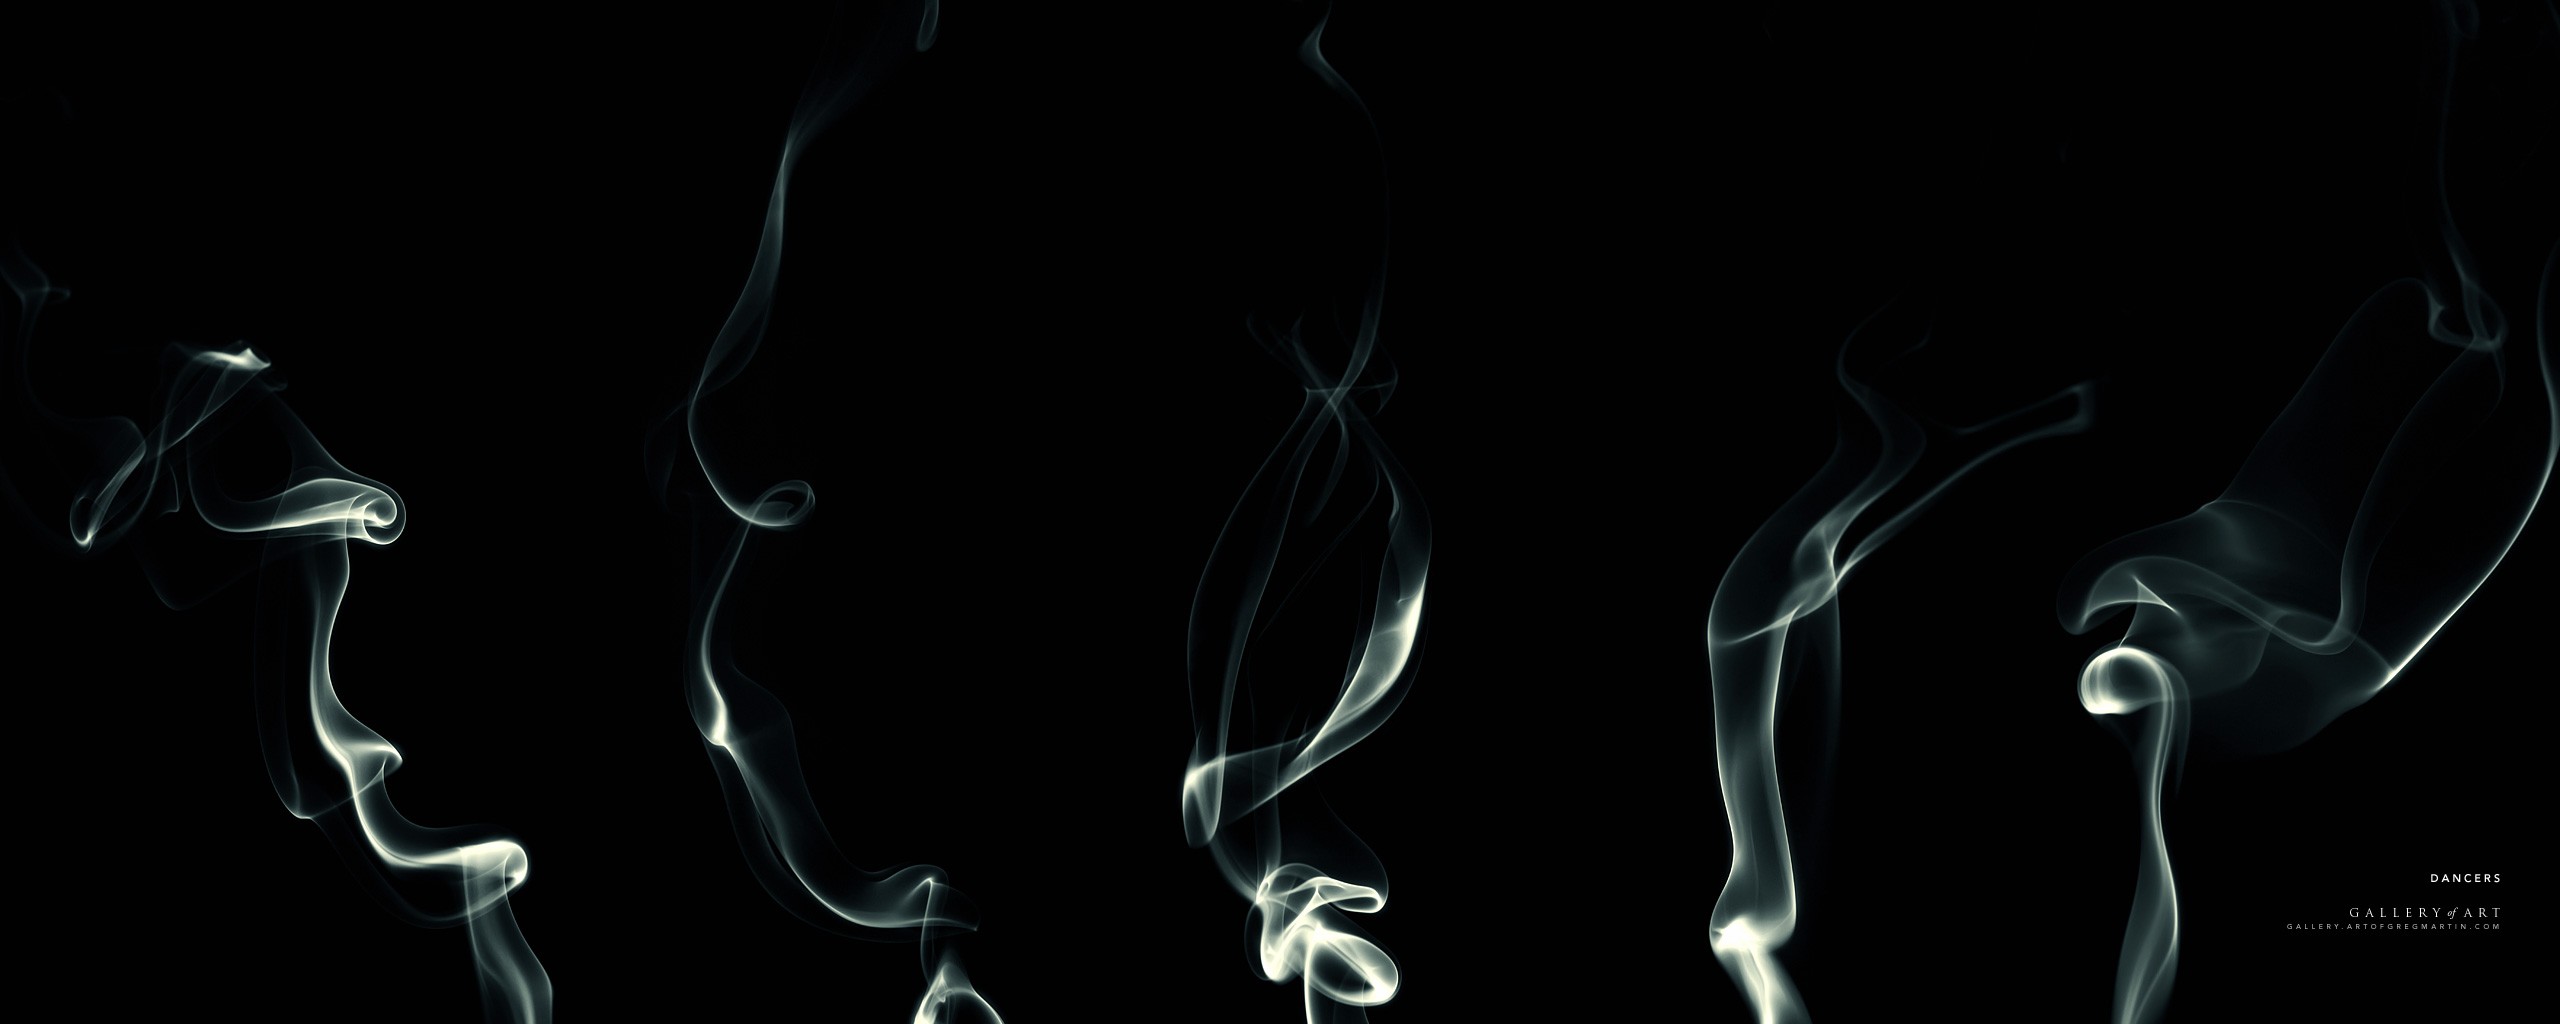 wonderful black smoke image